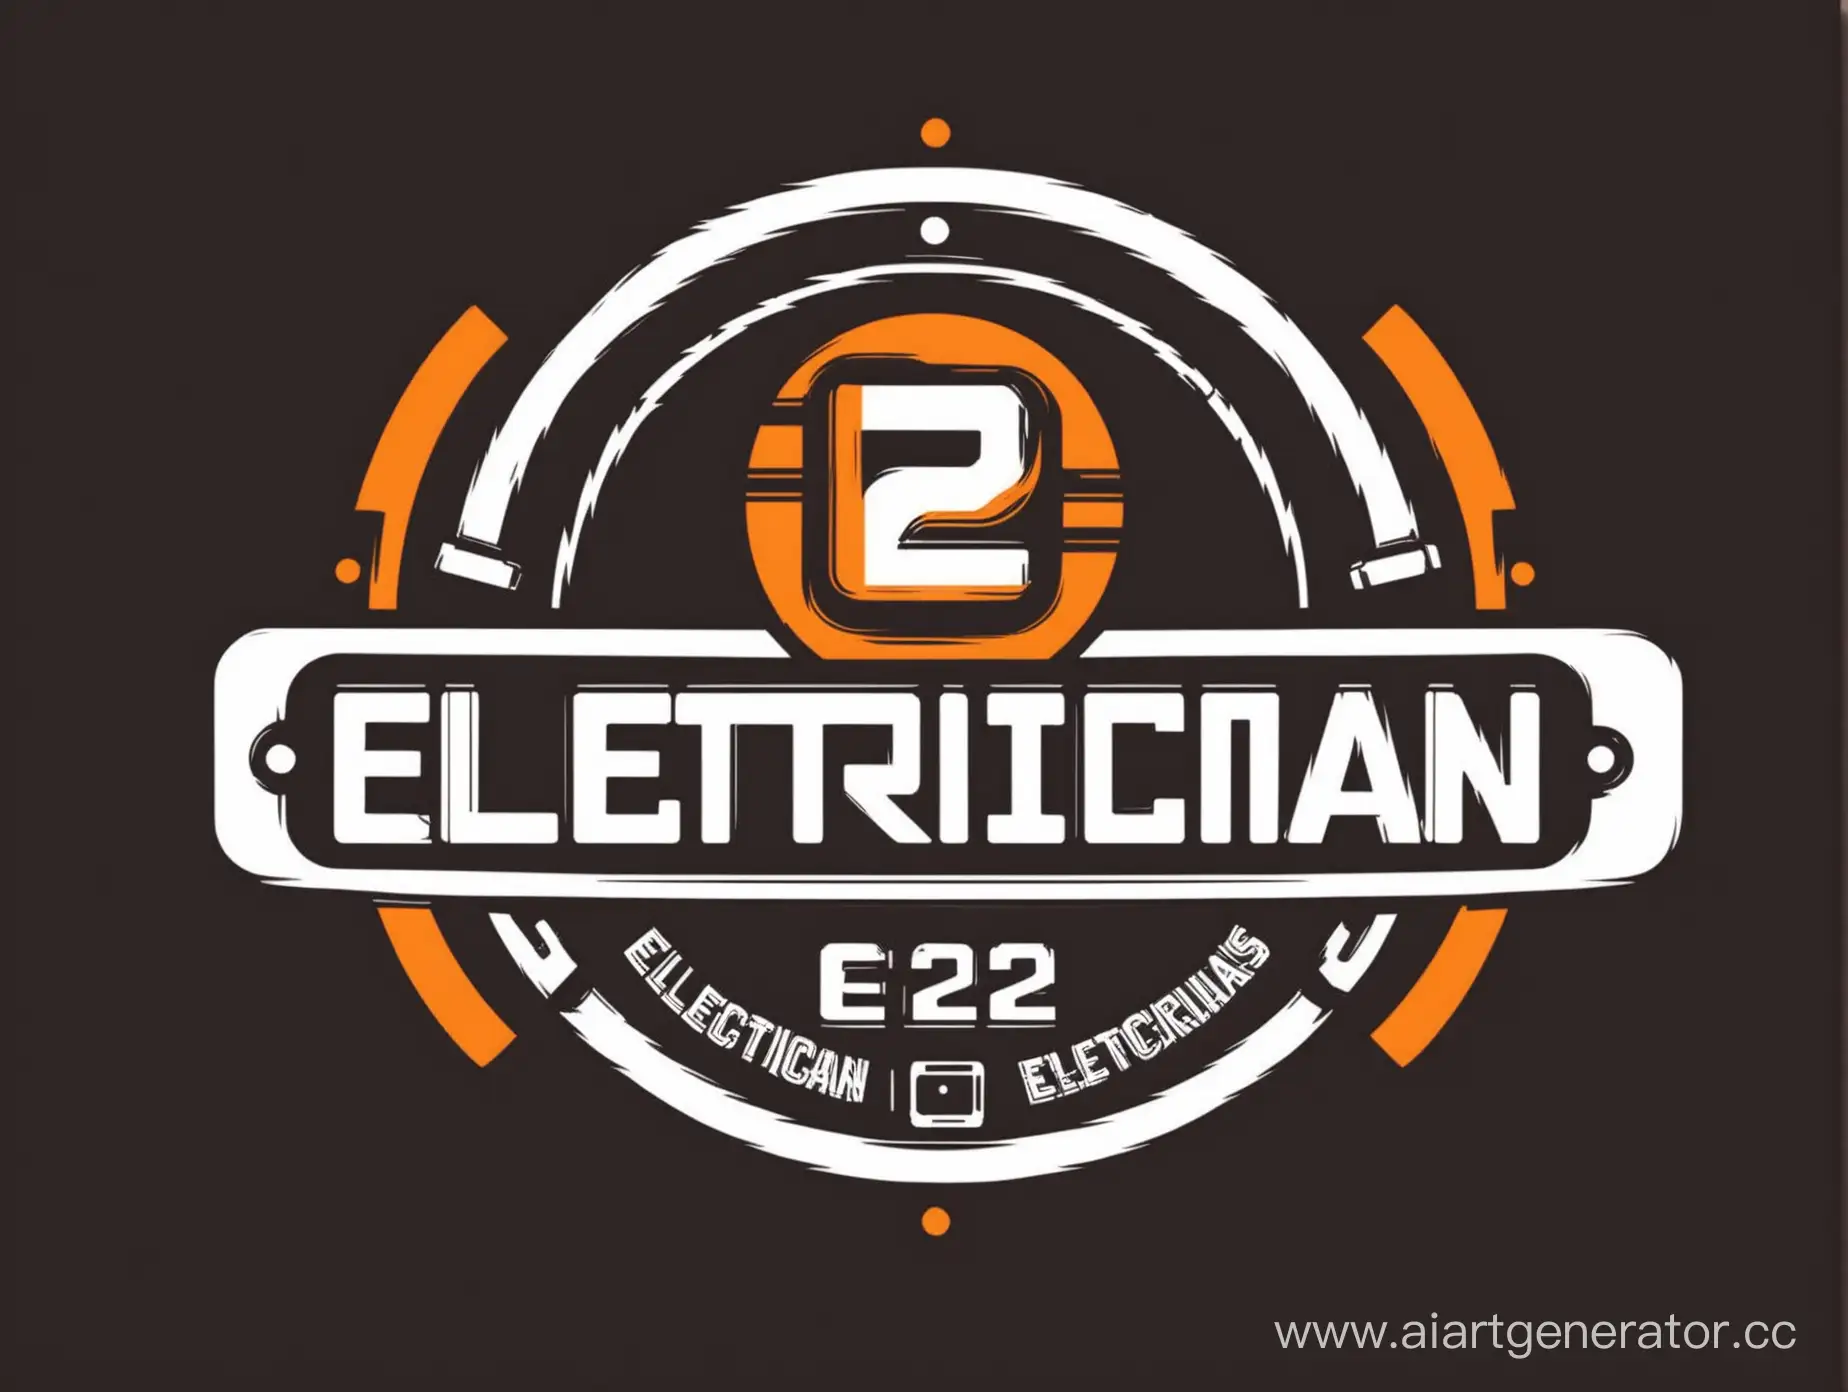 Electricians-E22-Teamwork-and-Expertise-Emblem